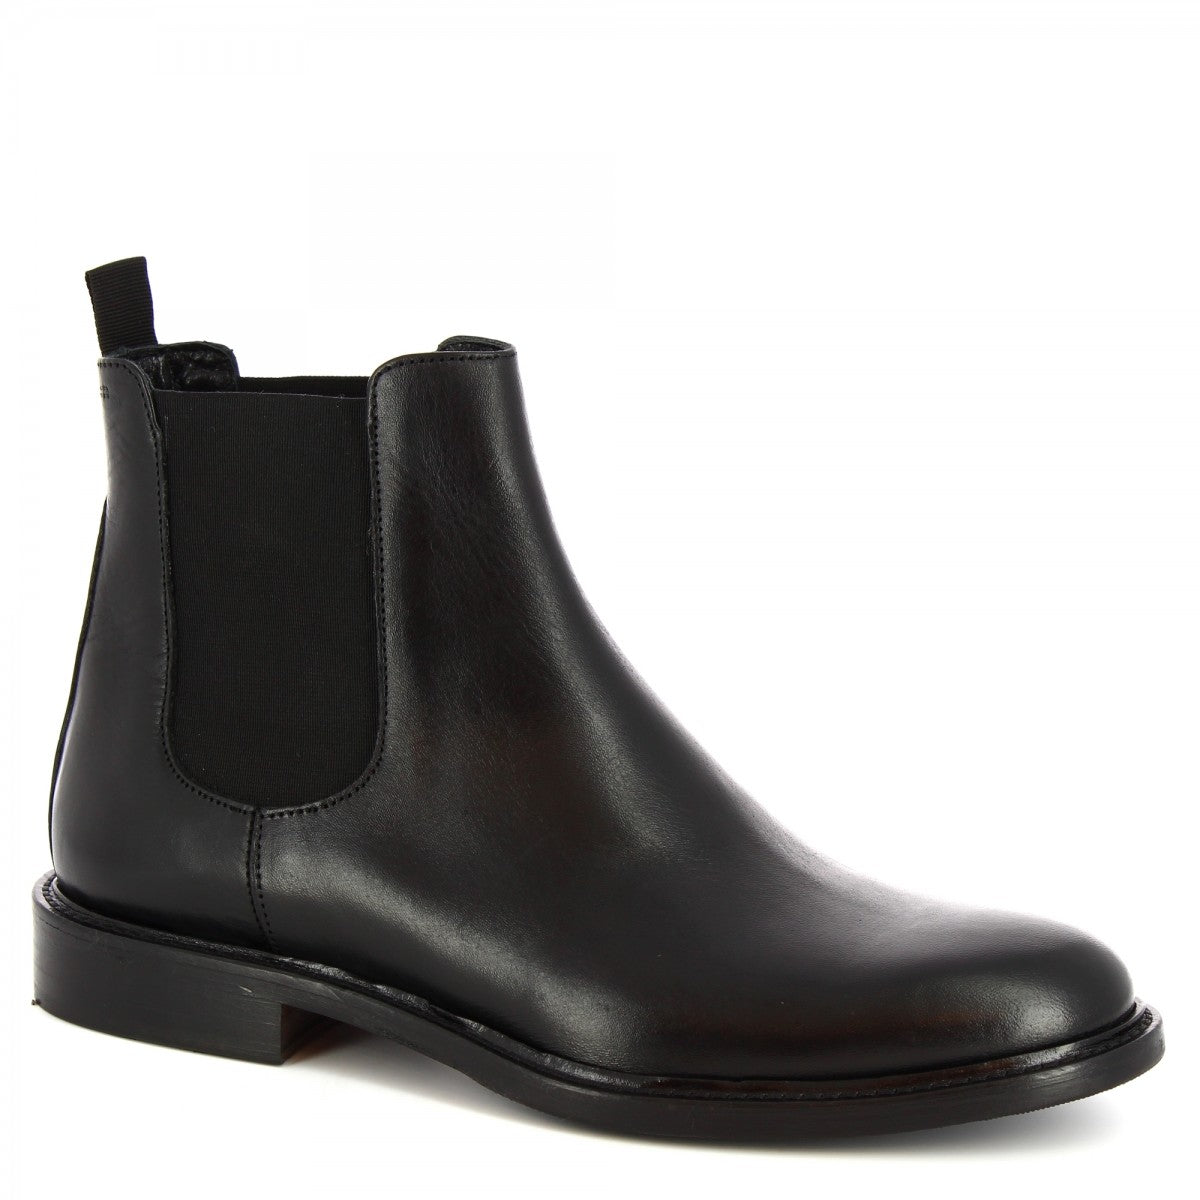 Men's handmade elegant ankle boots in black calf leather.